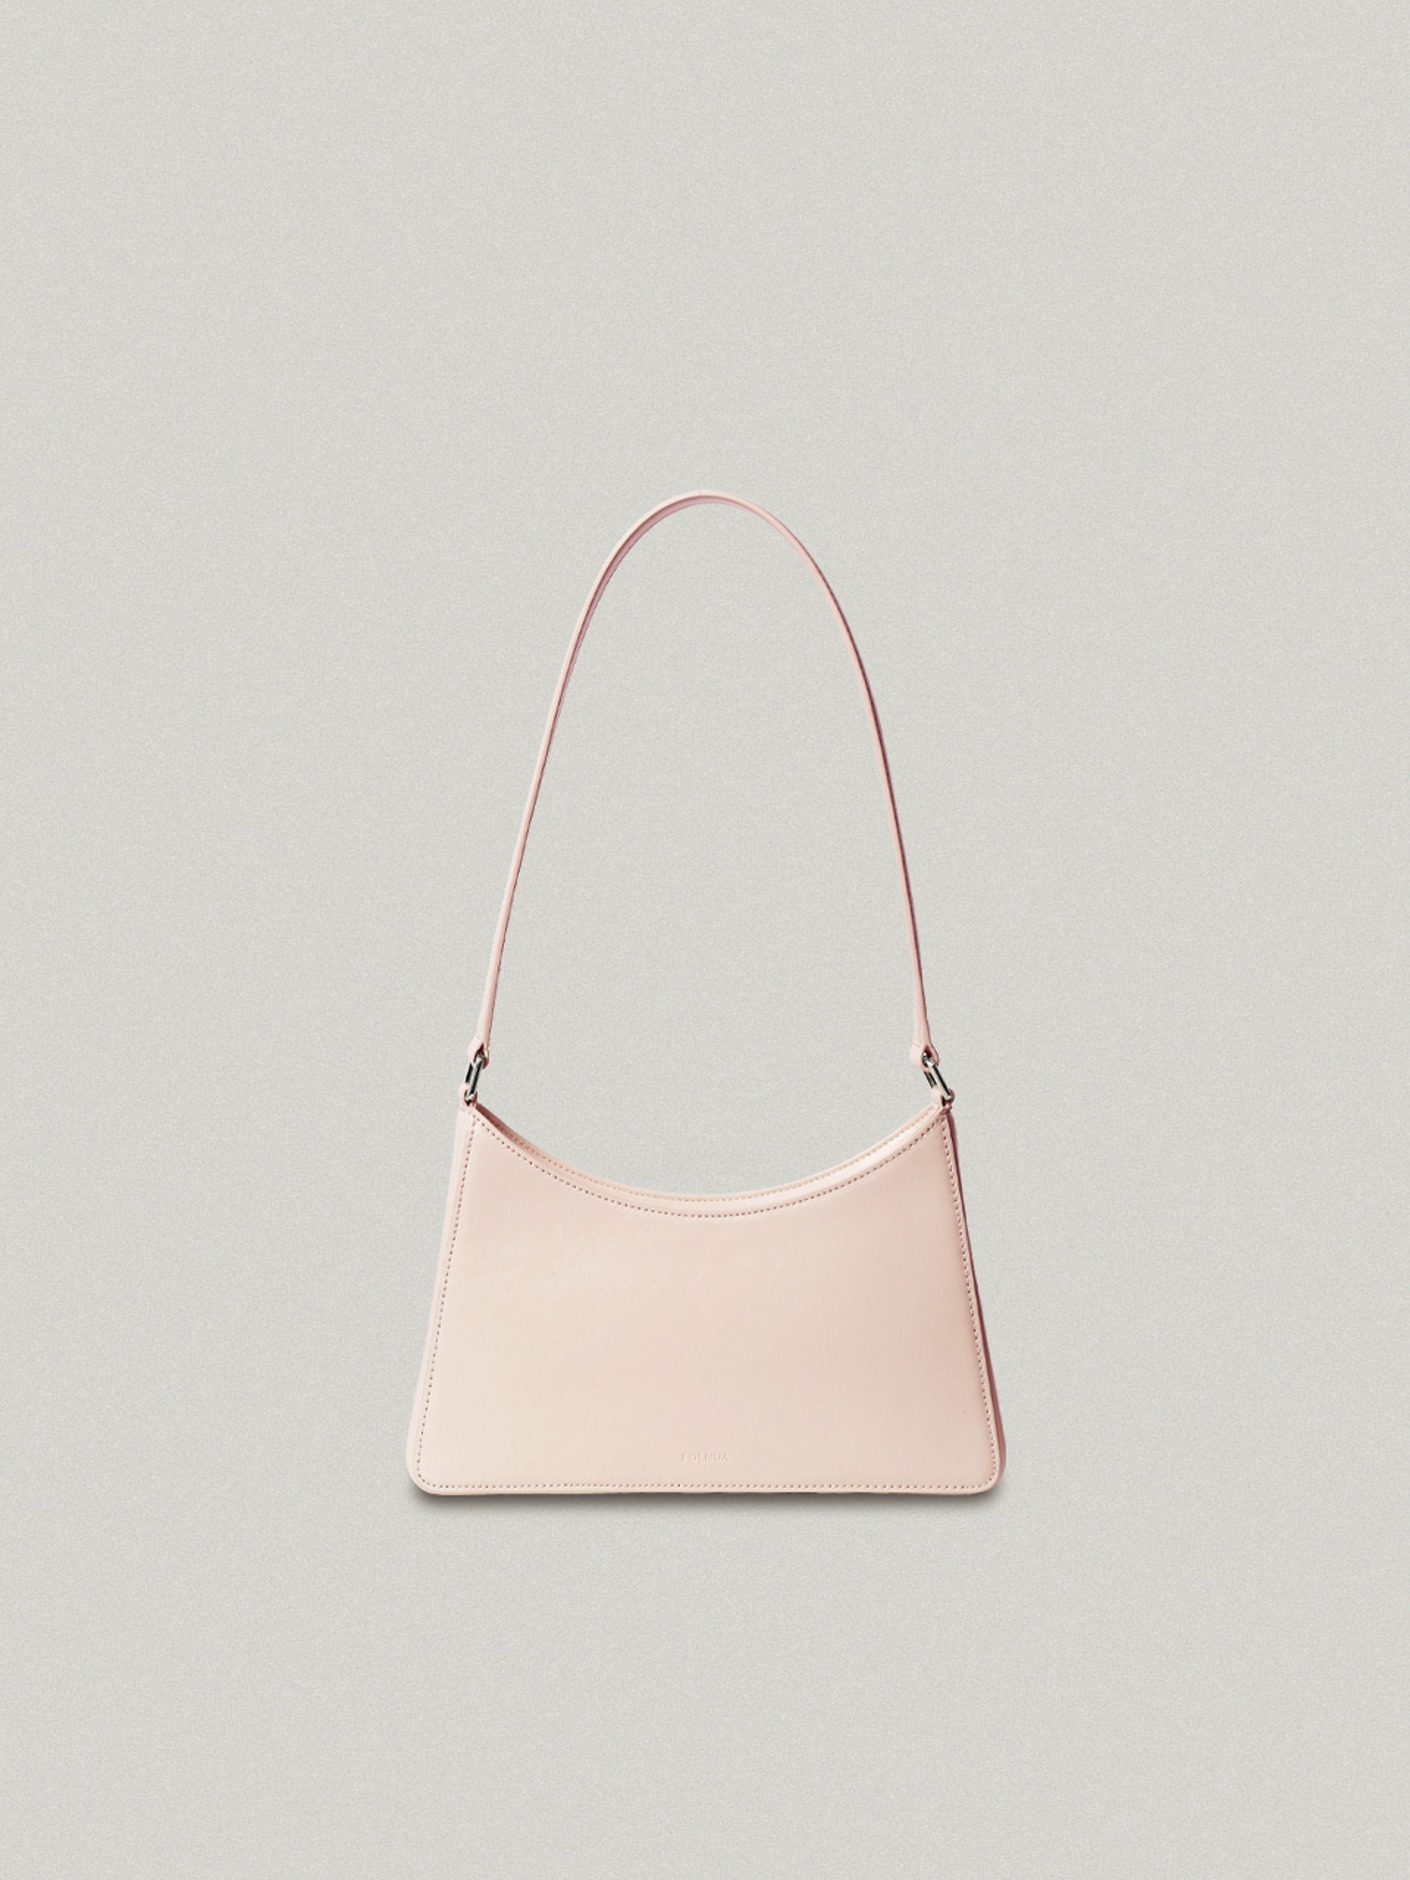 [LIMITED] Arc bag Baby pink - Crinkle아크백 - 크링클